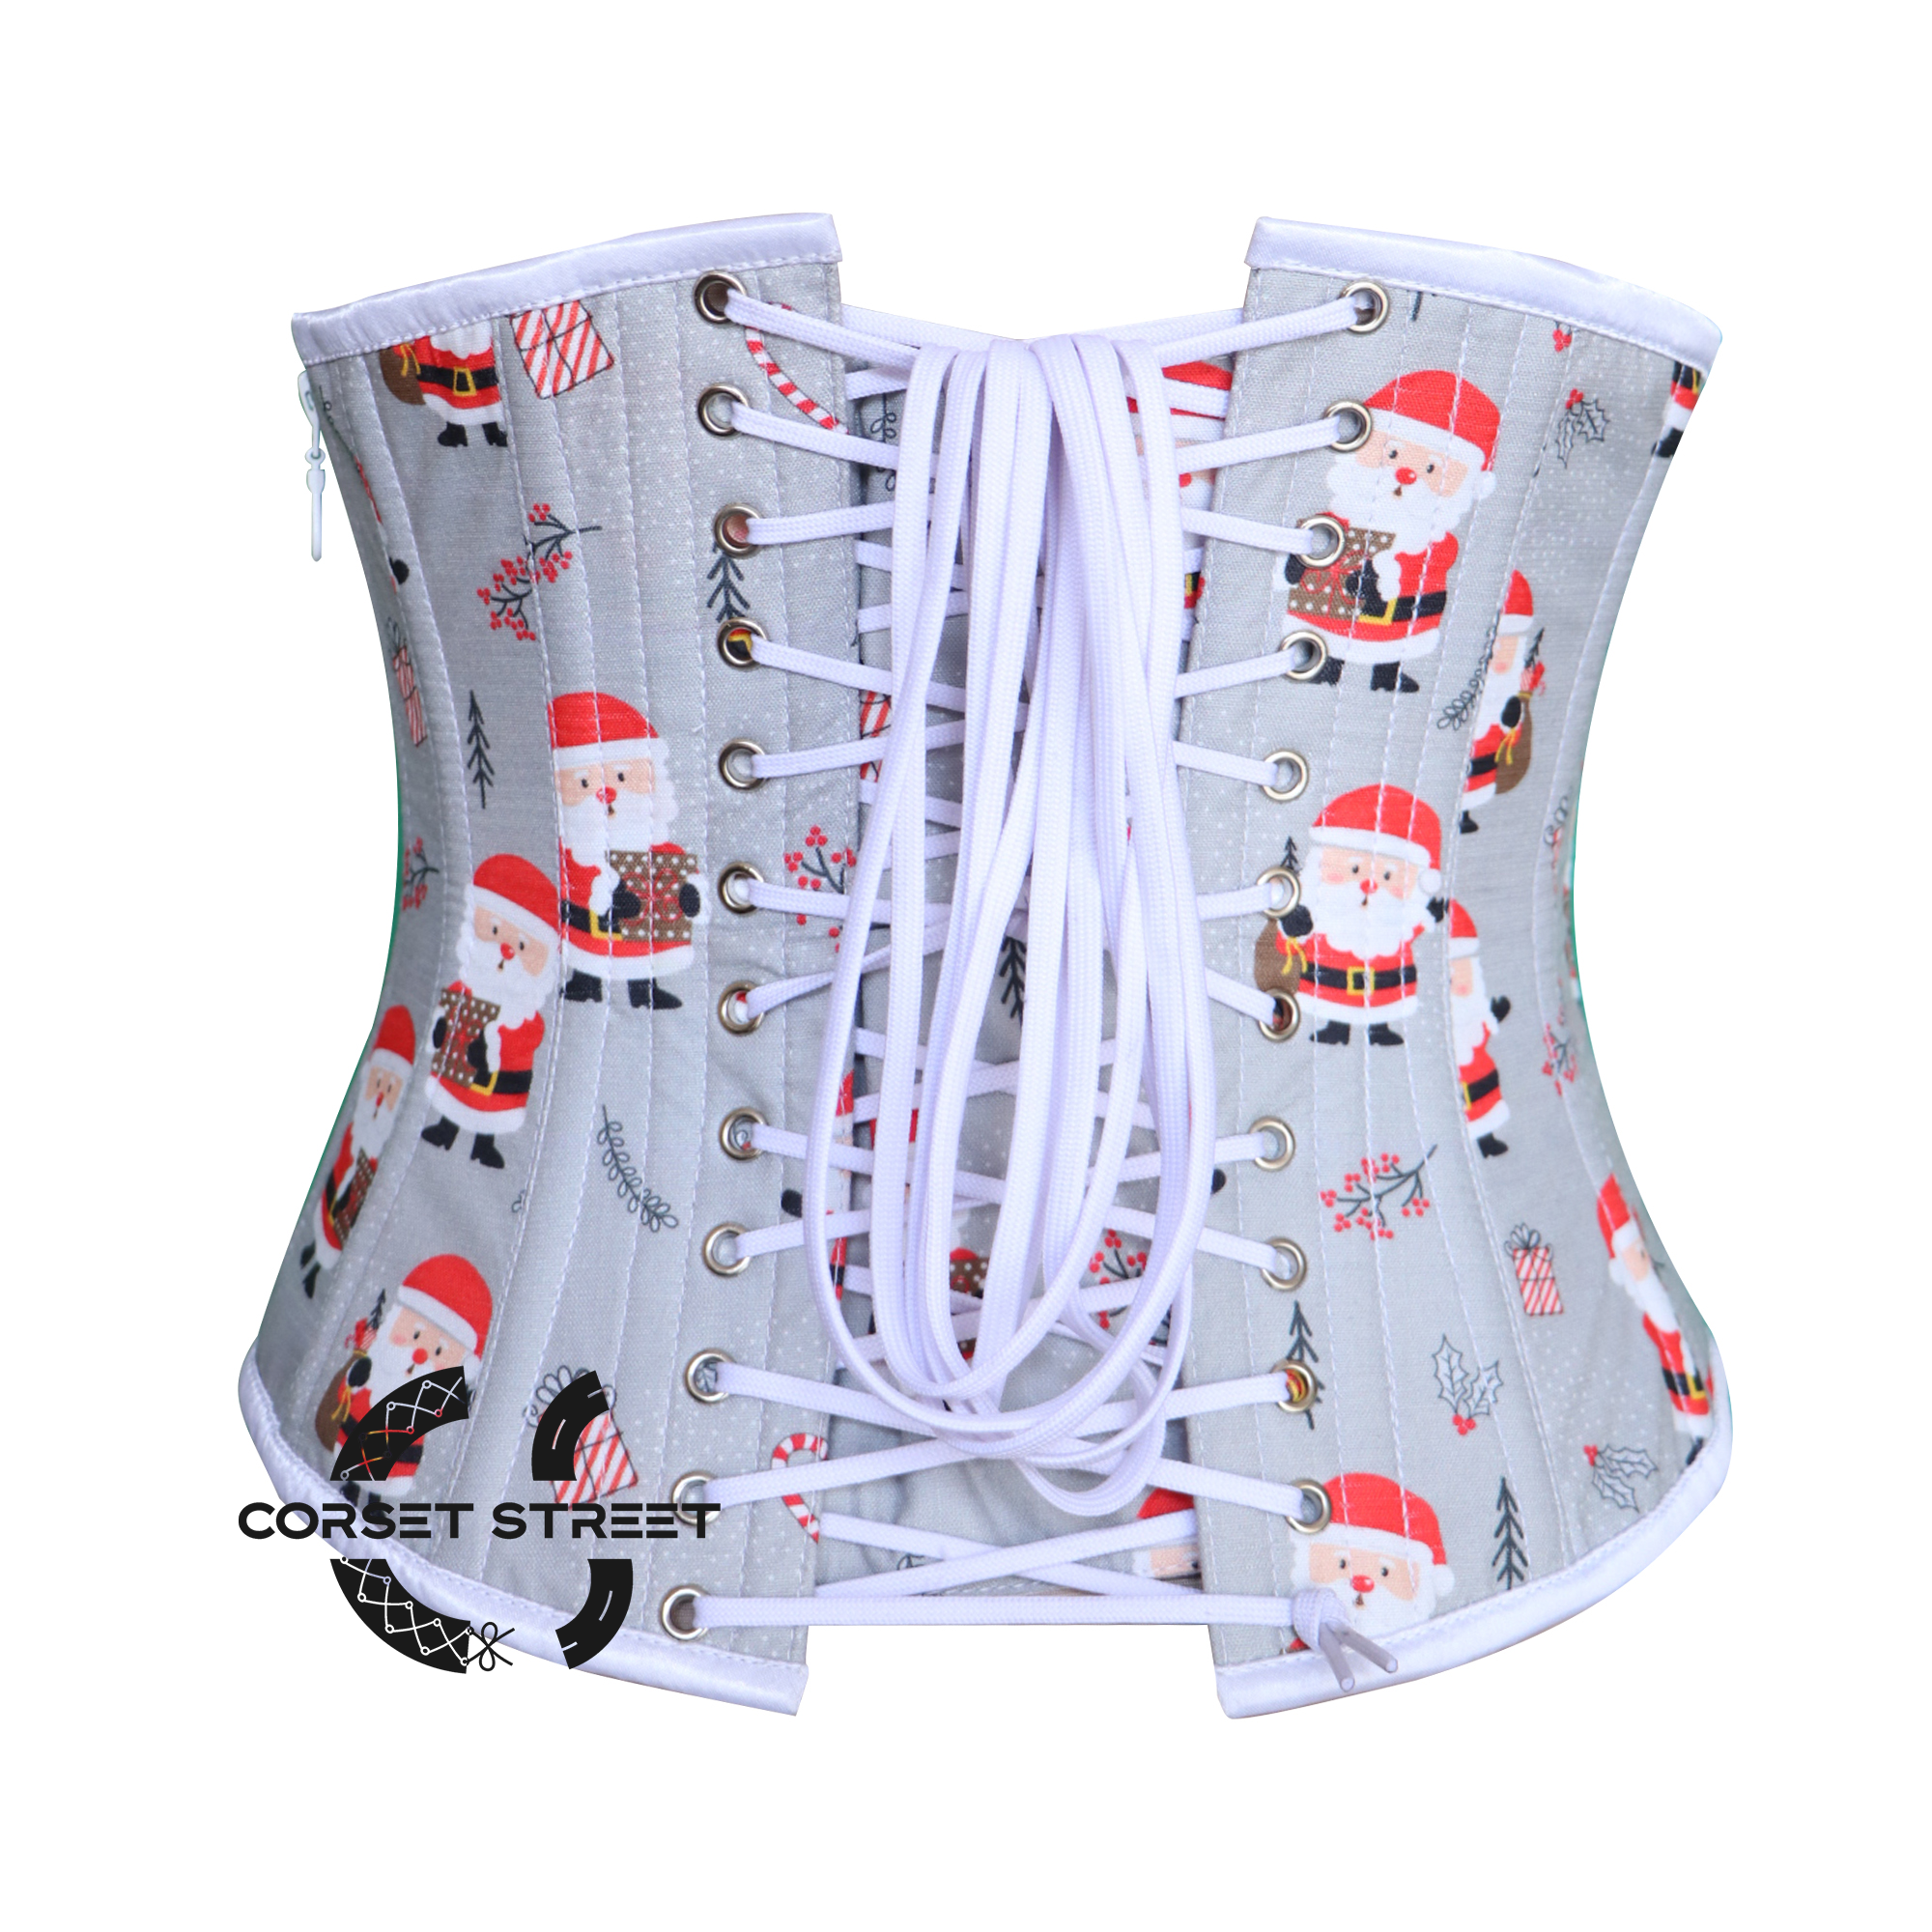 Santa Claus Printed Gray Cotton Underbust Corset Waist Training Costume Top